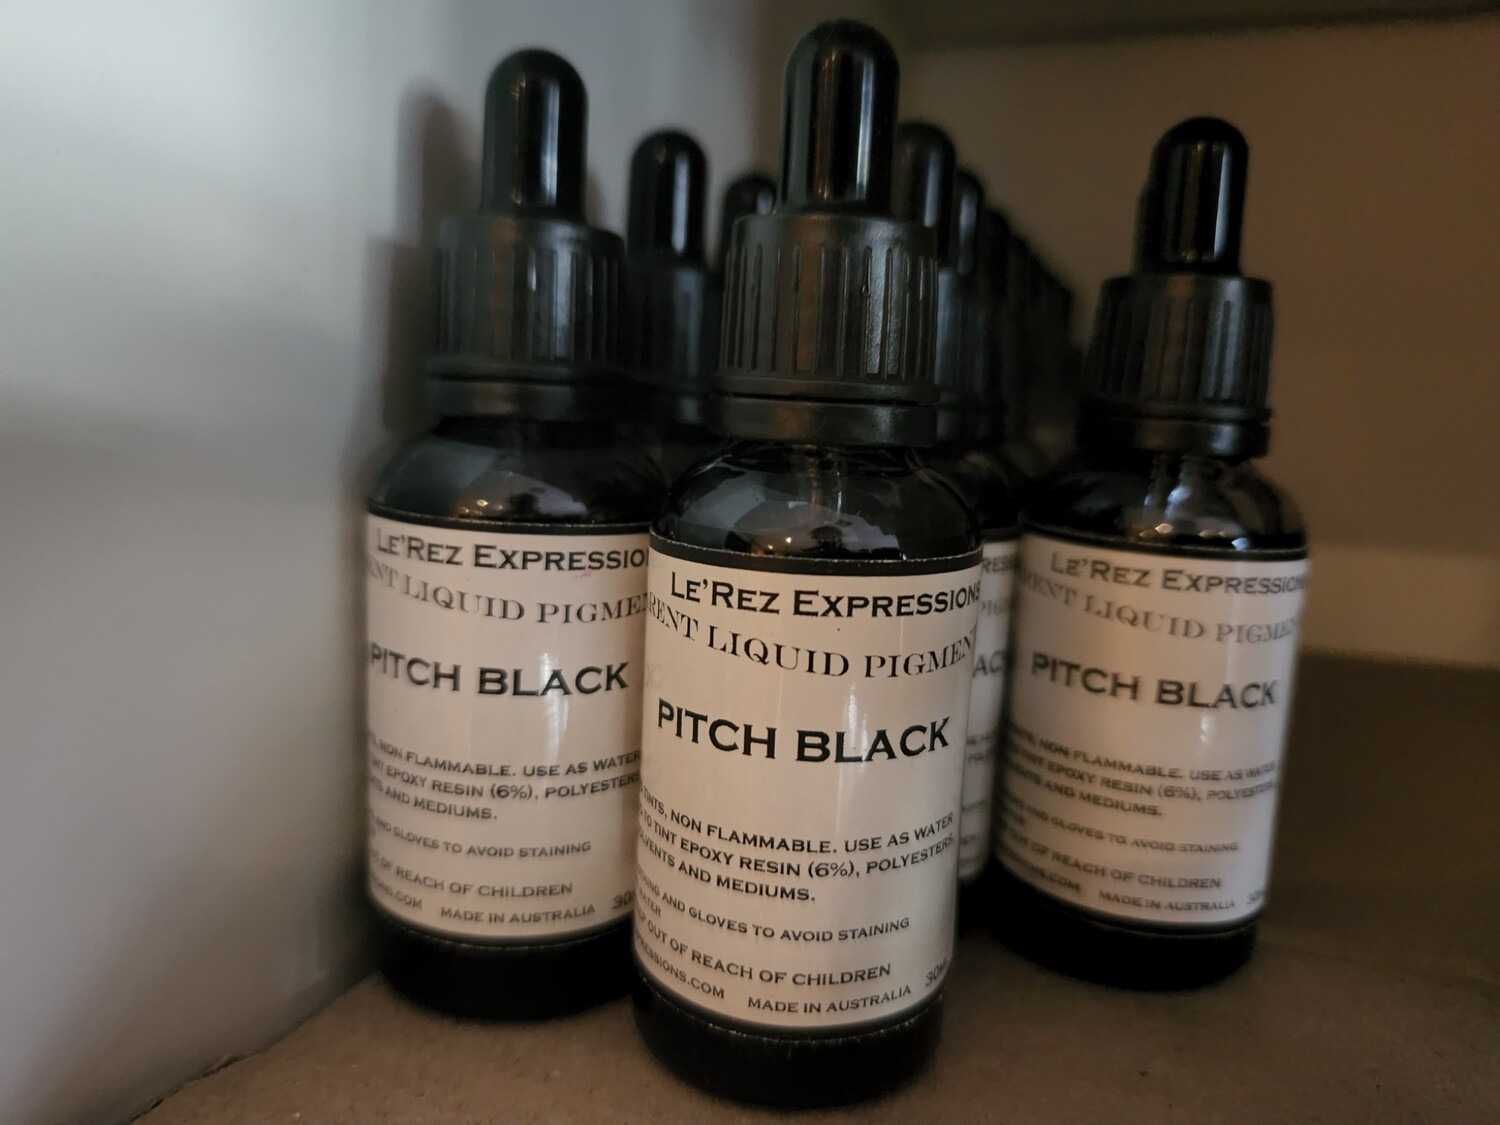 PITCH BLACK Transparent Liquid Pigment 30ml/ 1 oz